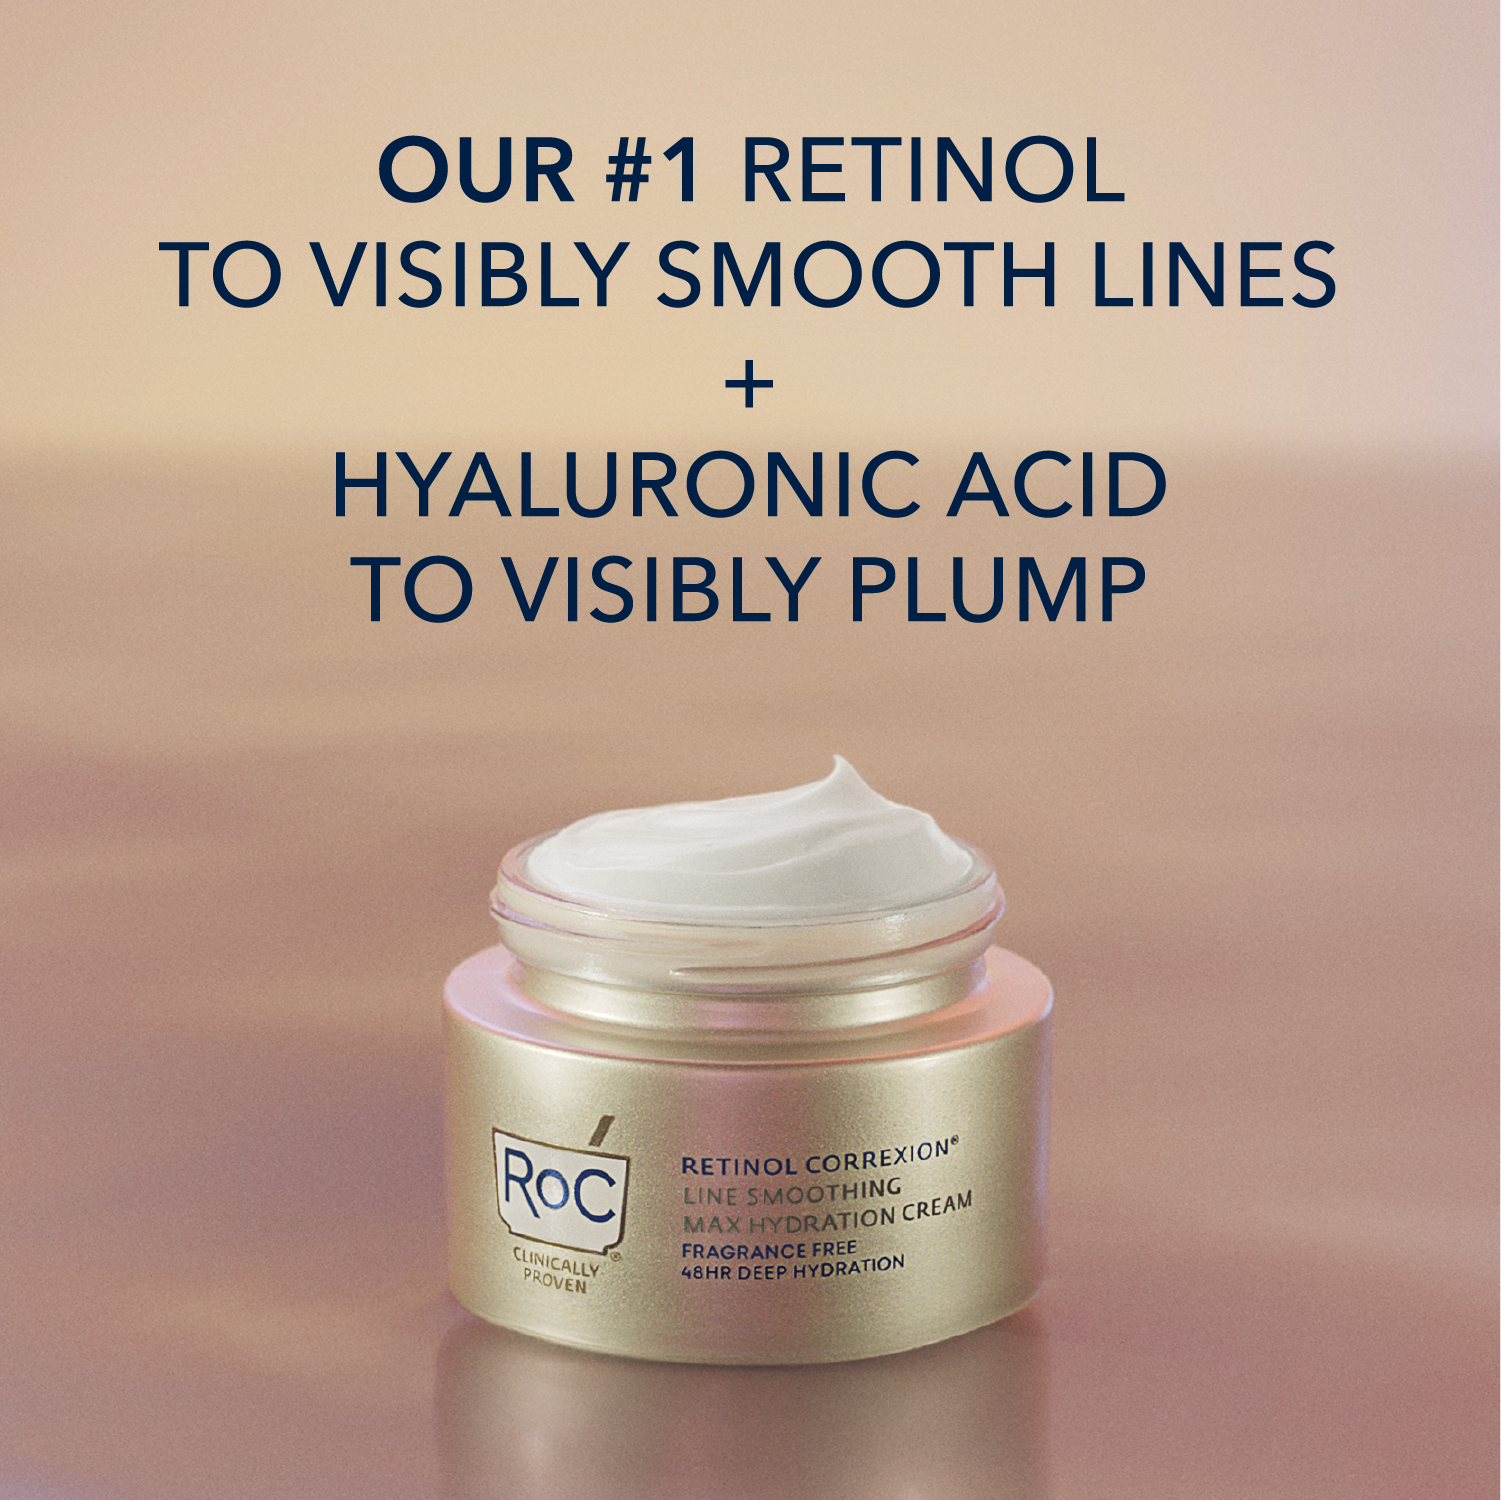 RoC Retinol Correxion Anti-Aging Daily Hydration Moisturizer Cream with Hydrating Hyaluronic Acid, Fragrance-Free, 1.7 oz - image 4 of 8